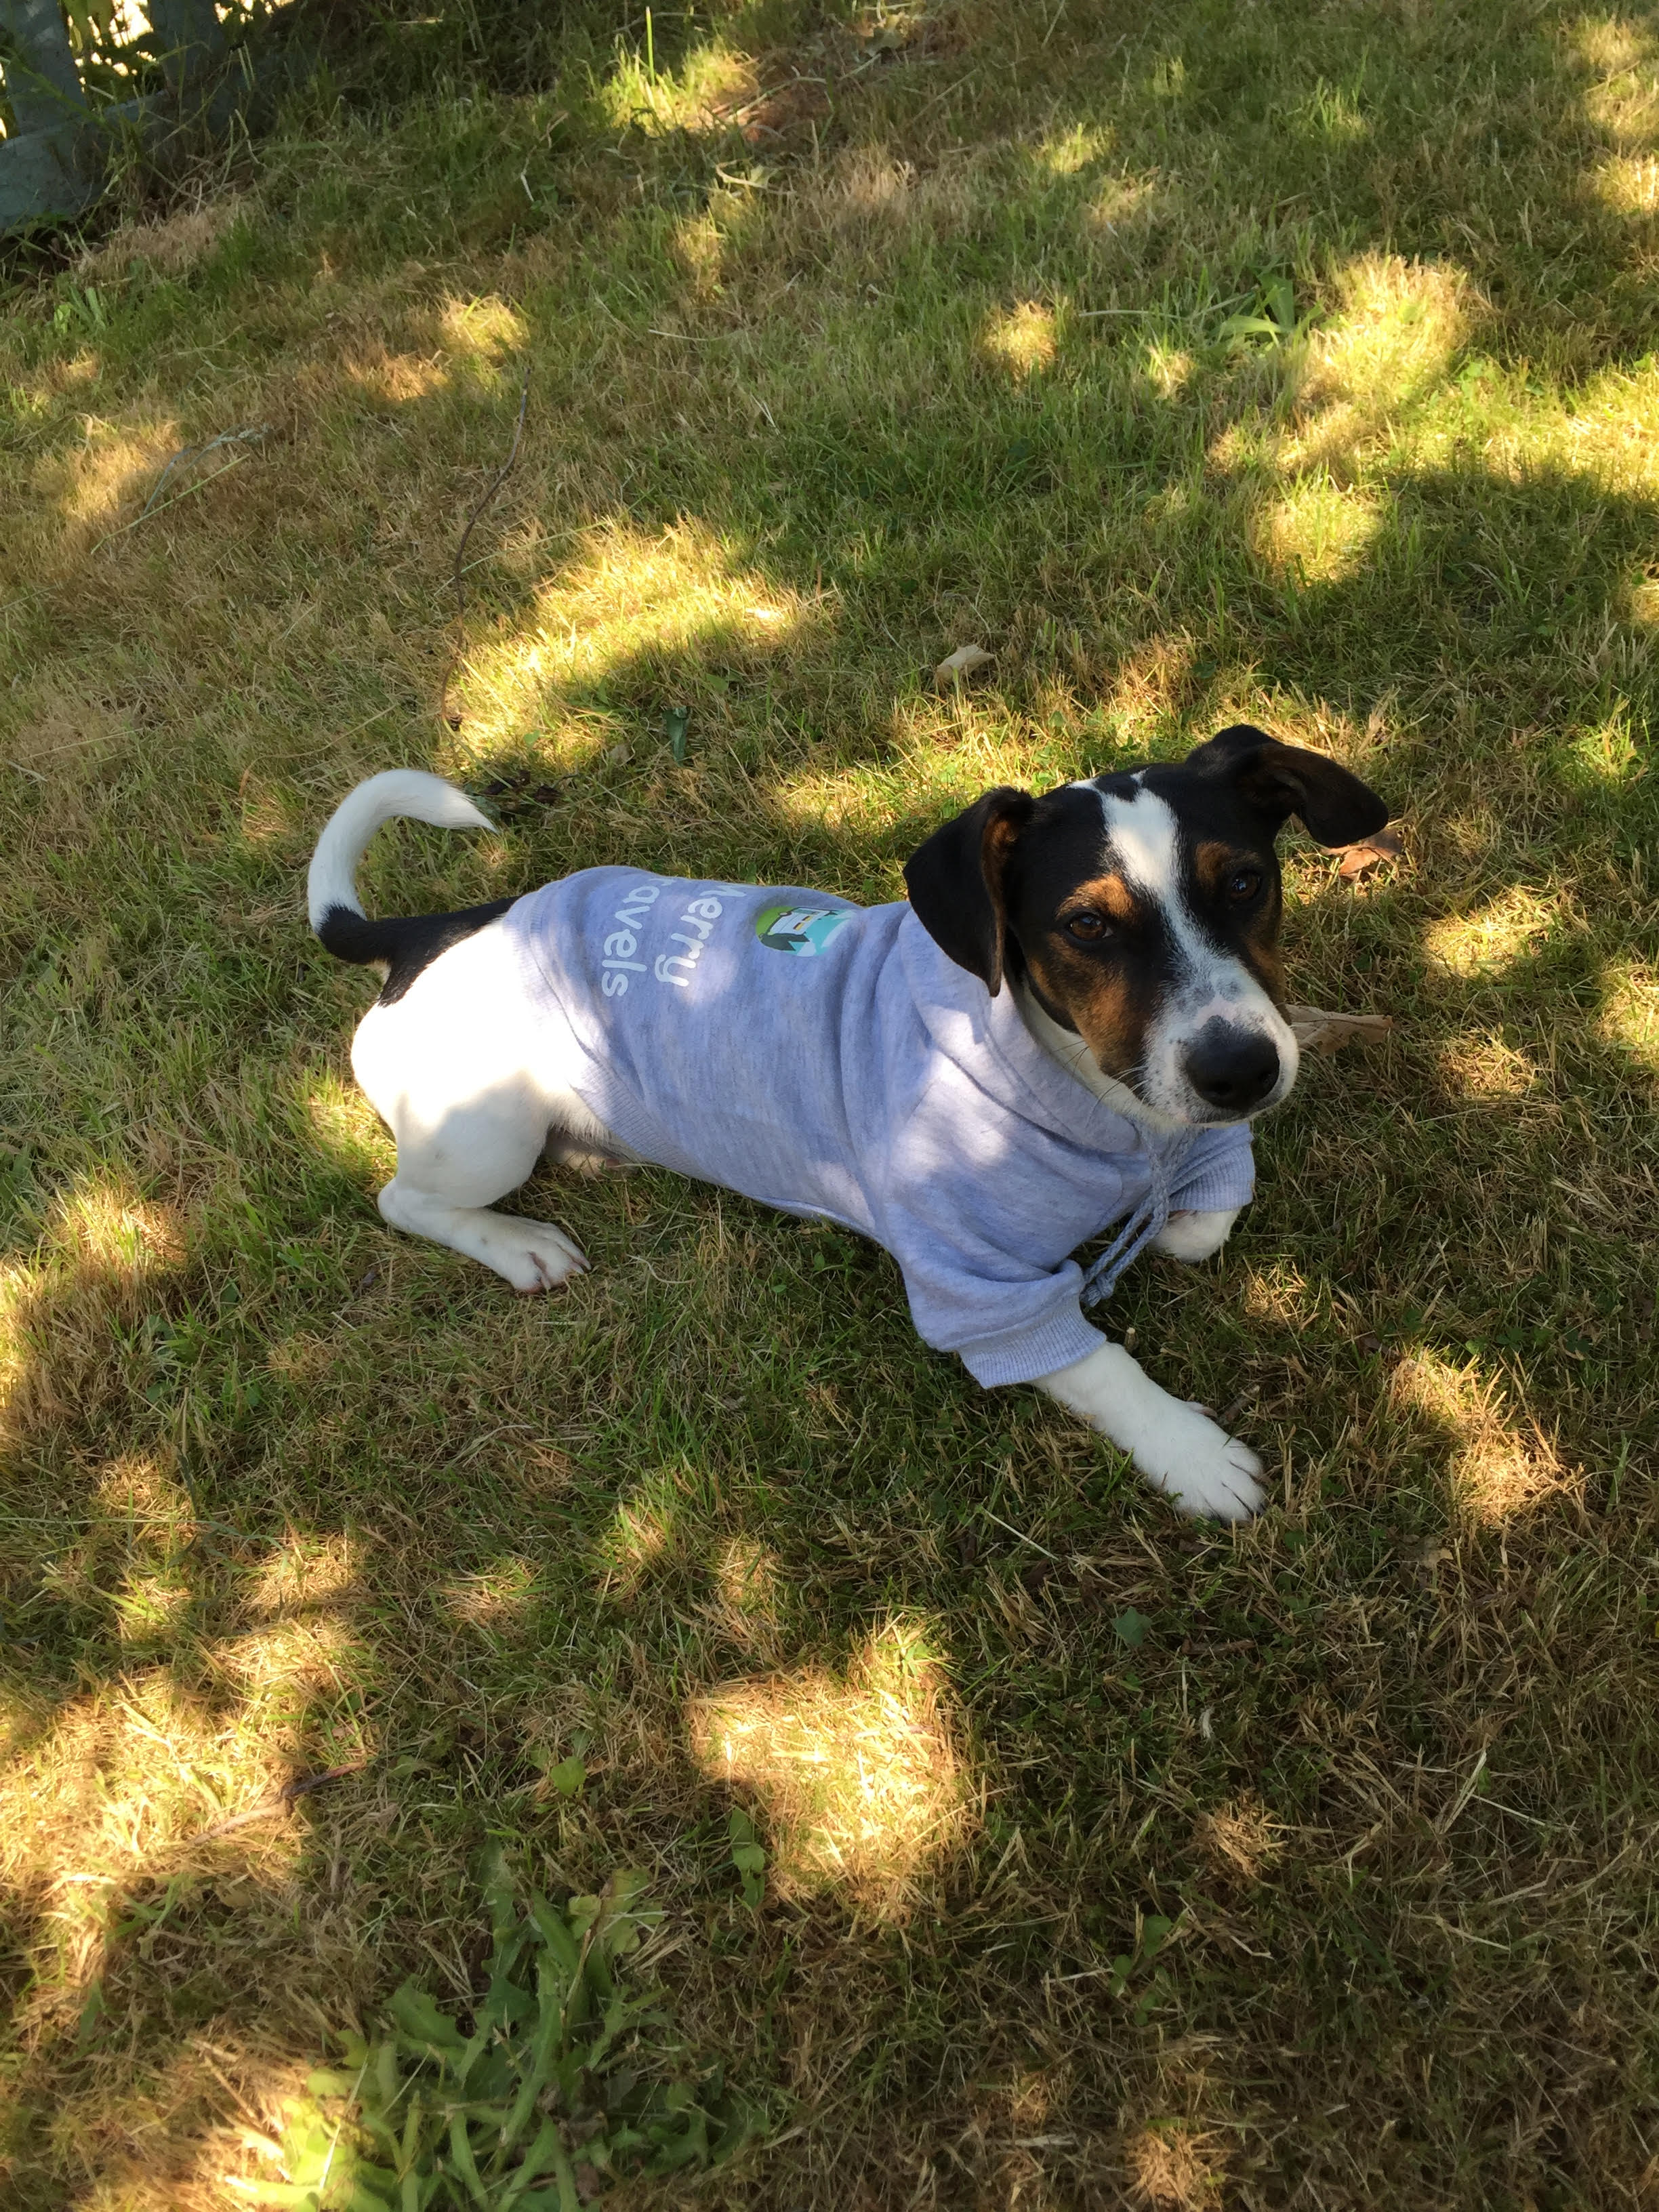 Bertie will need his dog hoodie this winter!